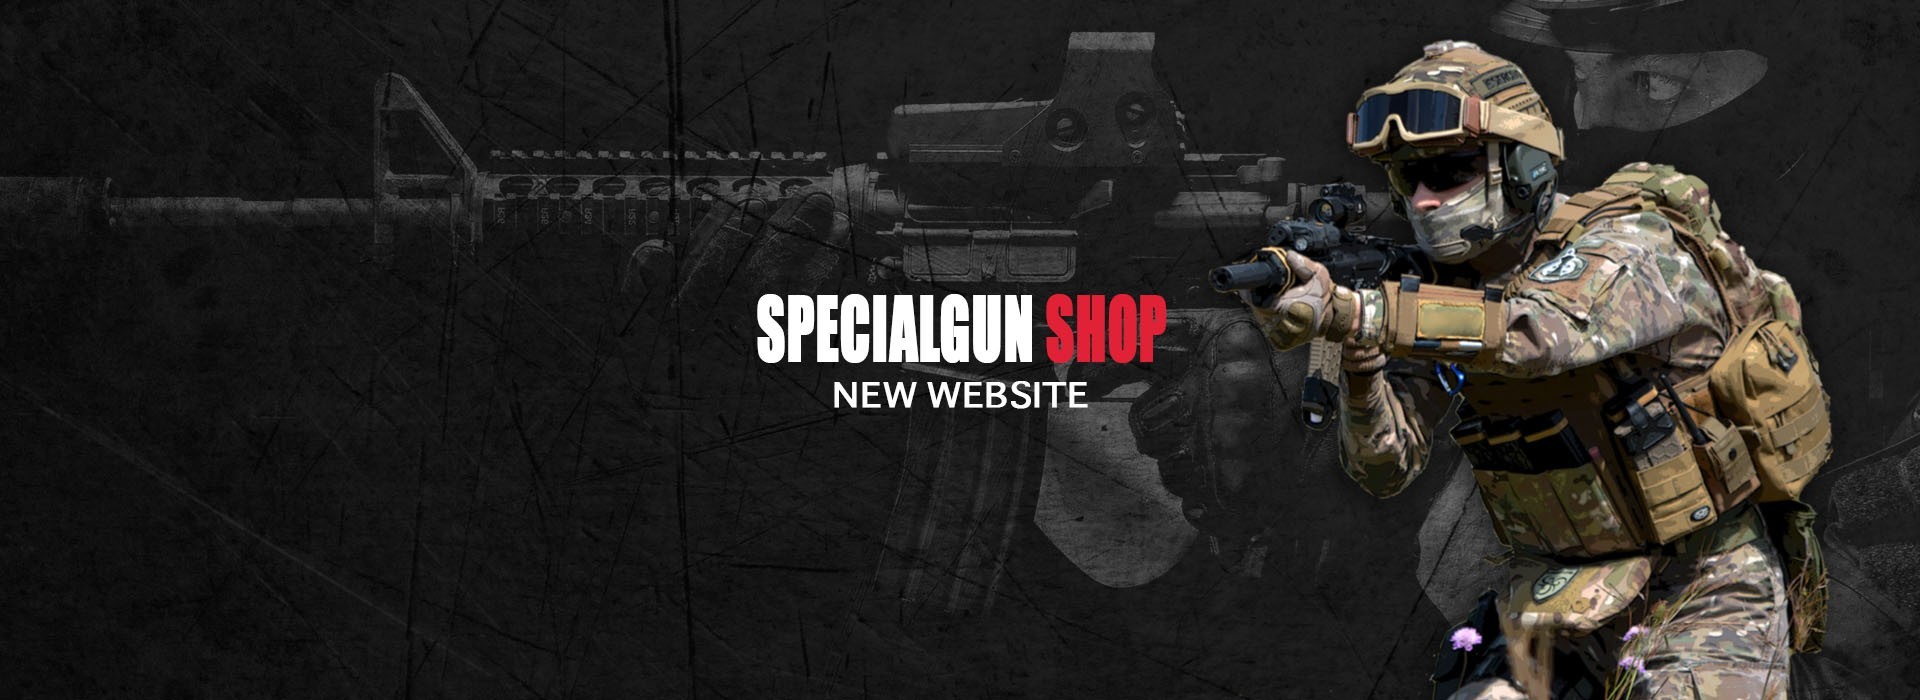 Specialgun Shop